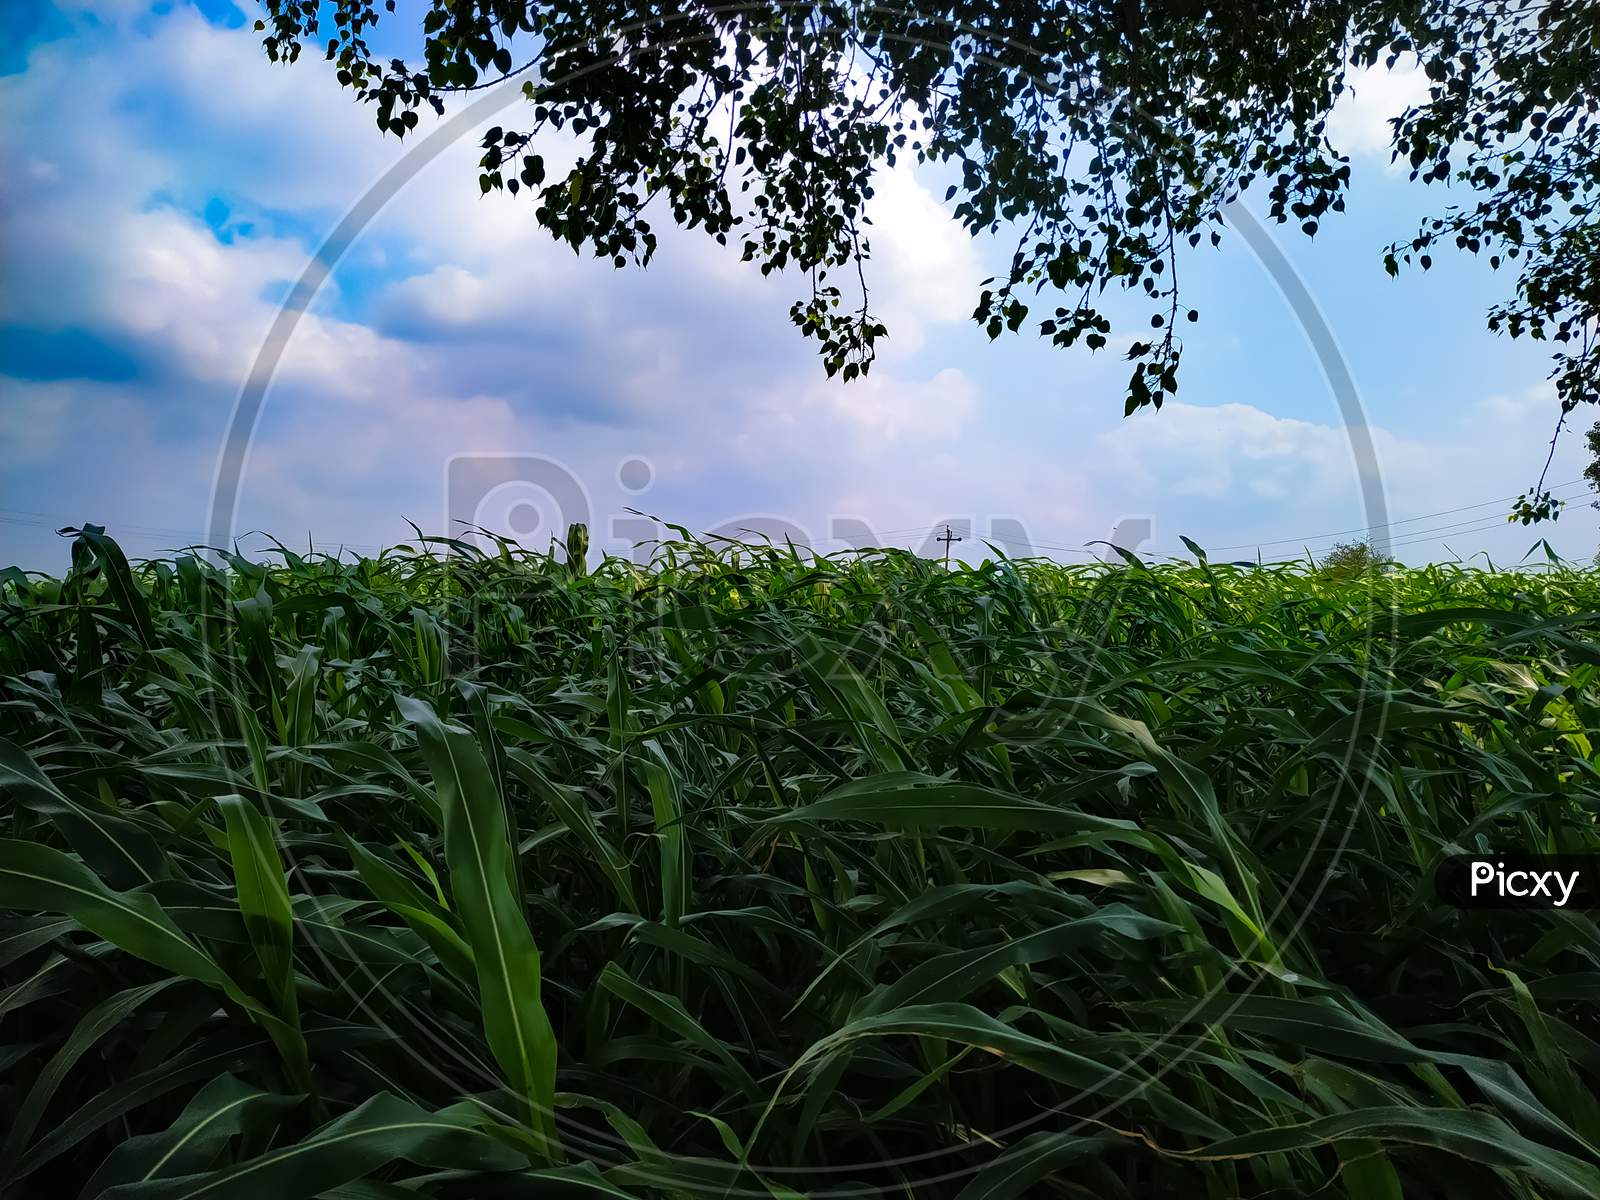 Beautiful Shot Of A Field Under A Blue Cloudy Sky